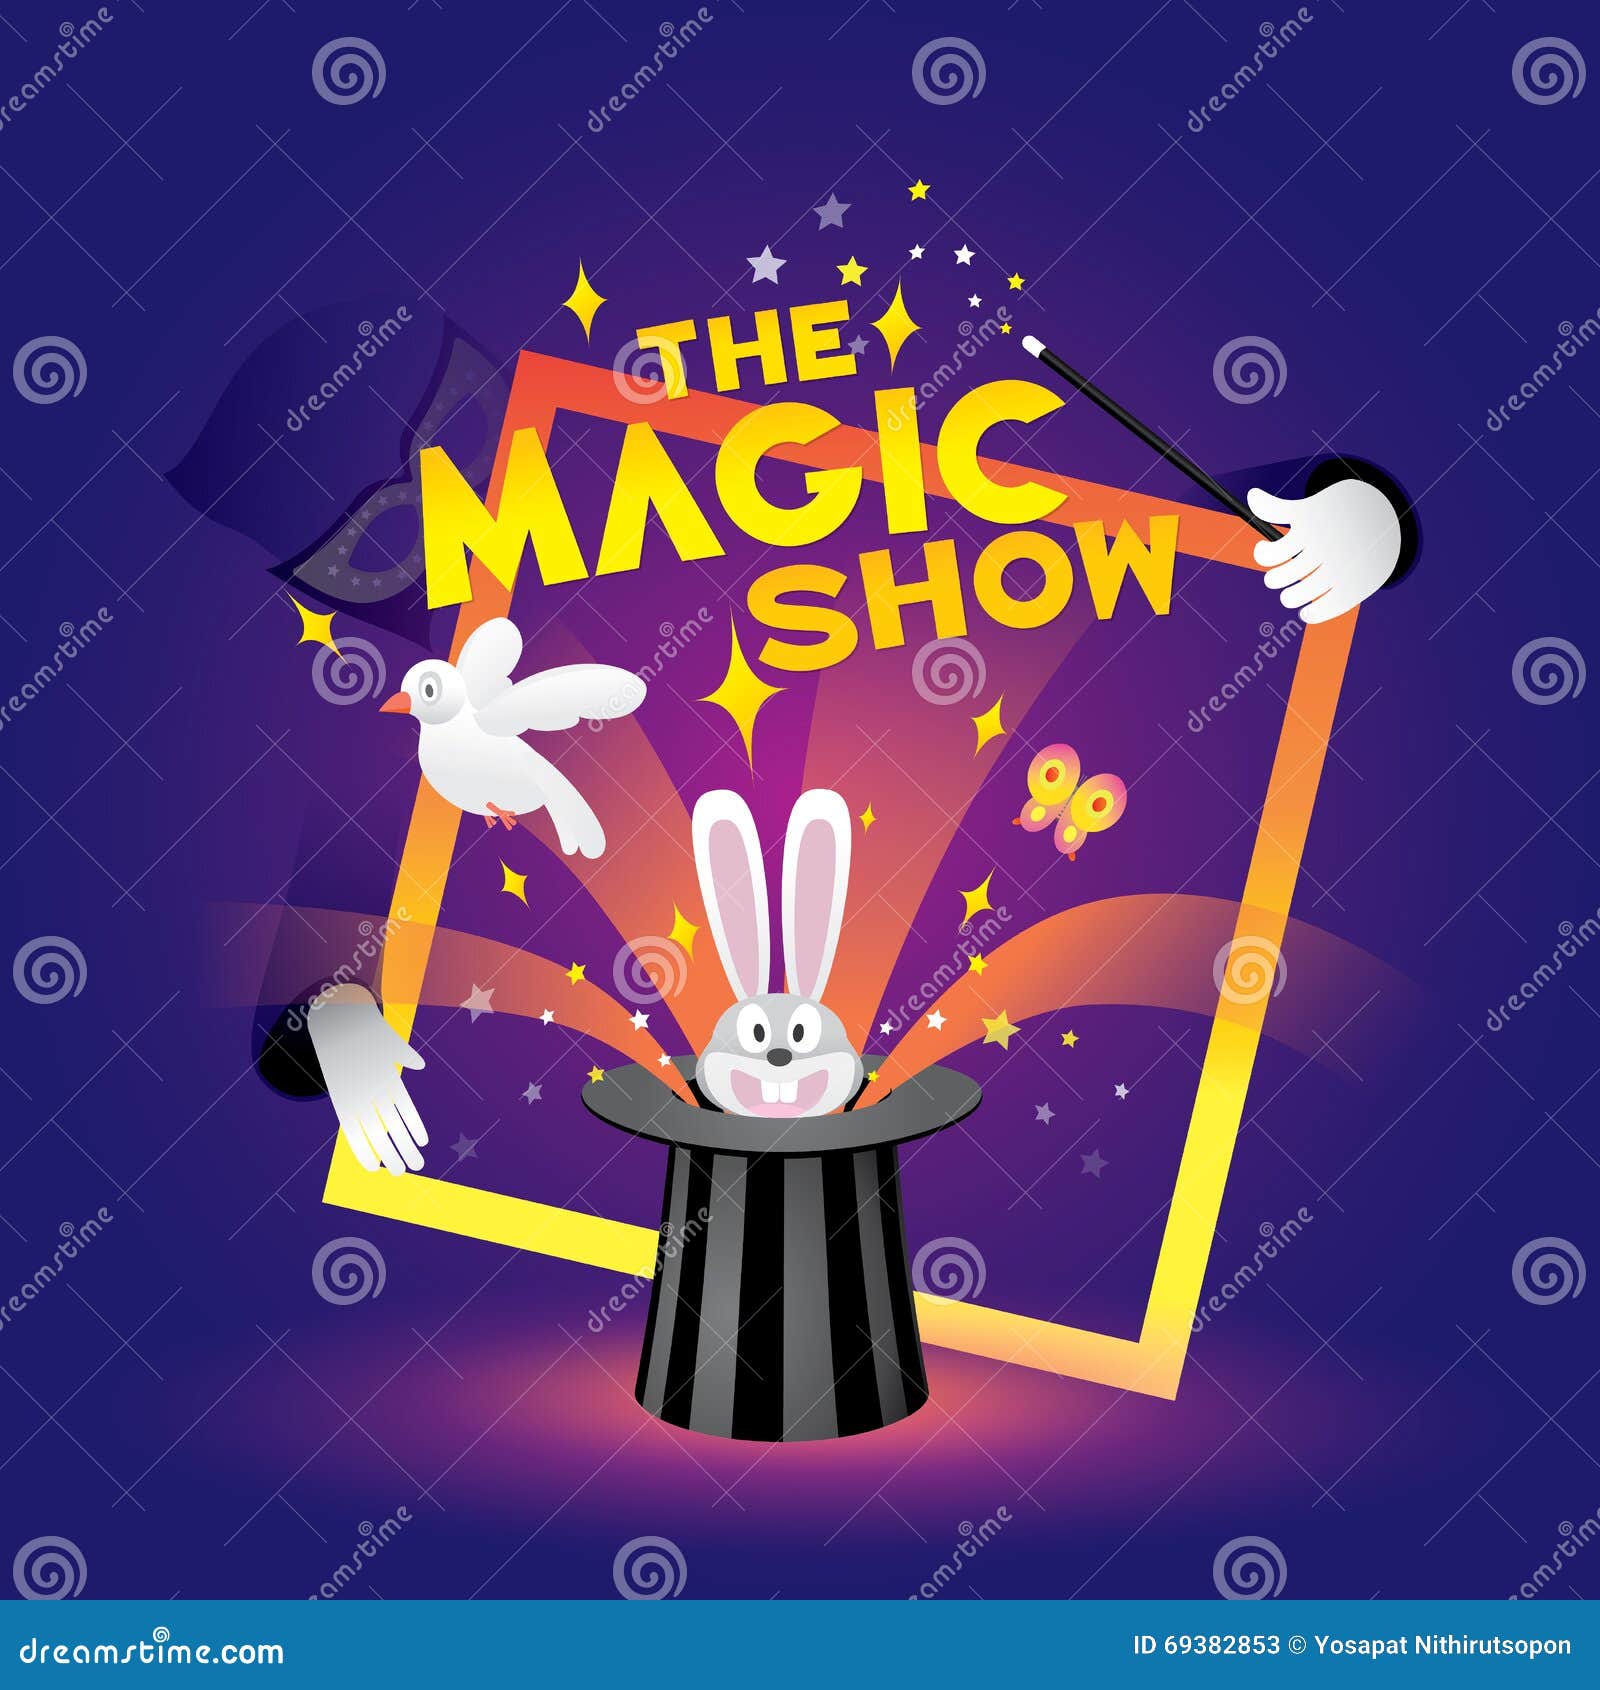 the magic show